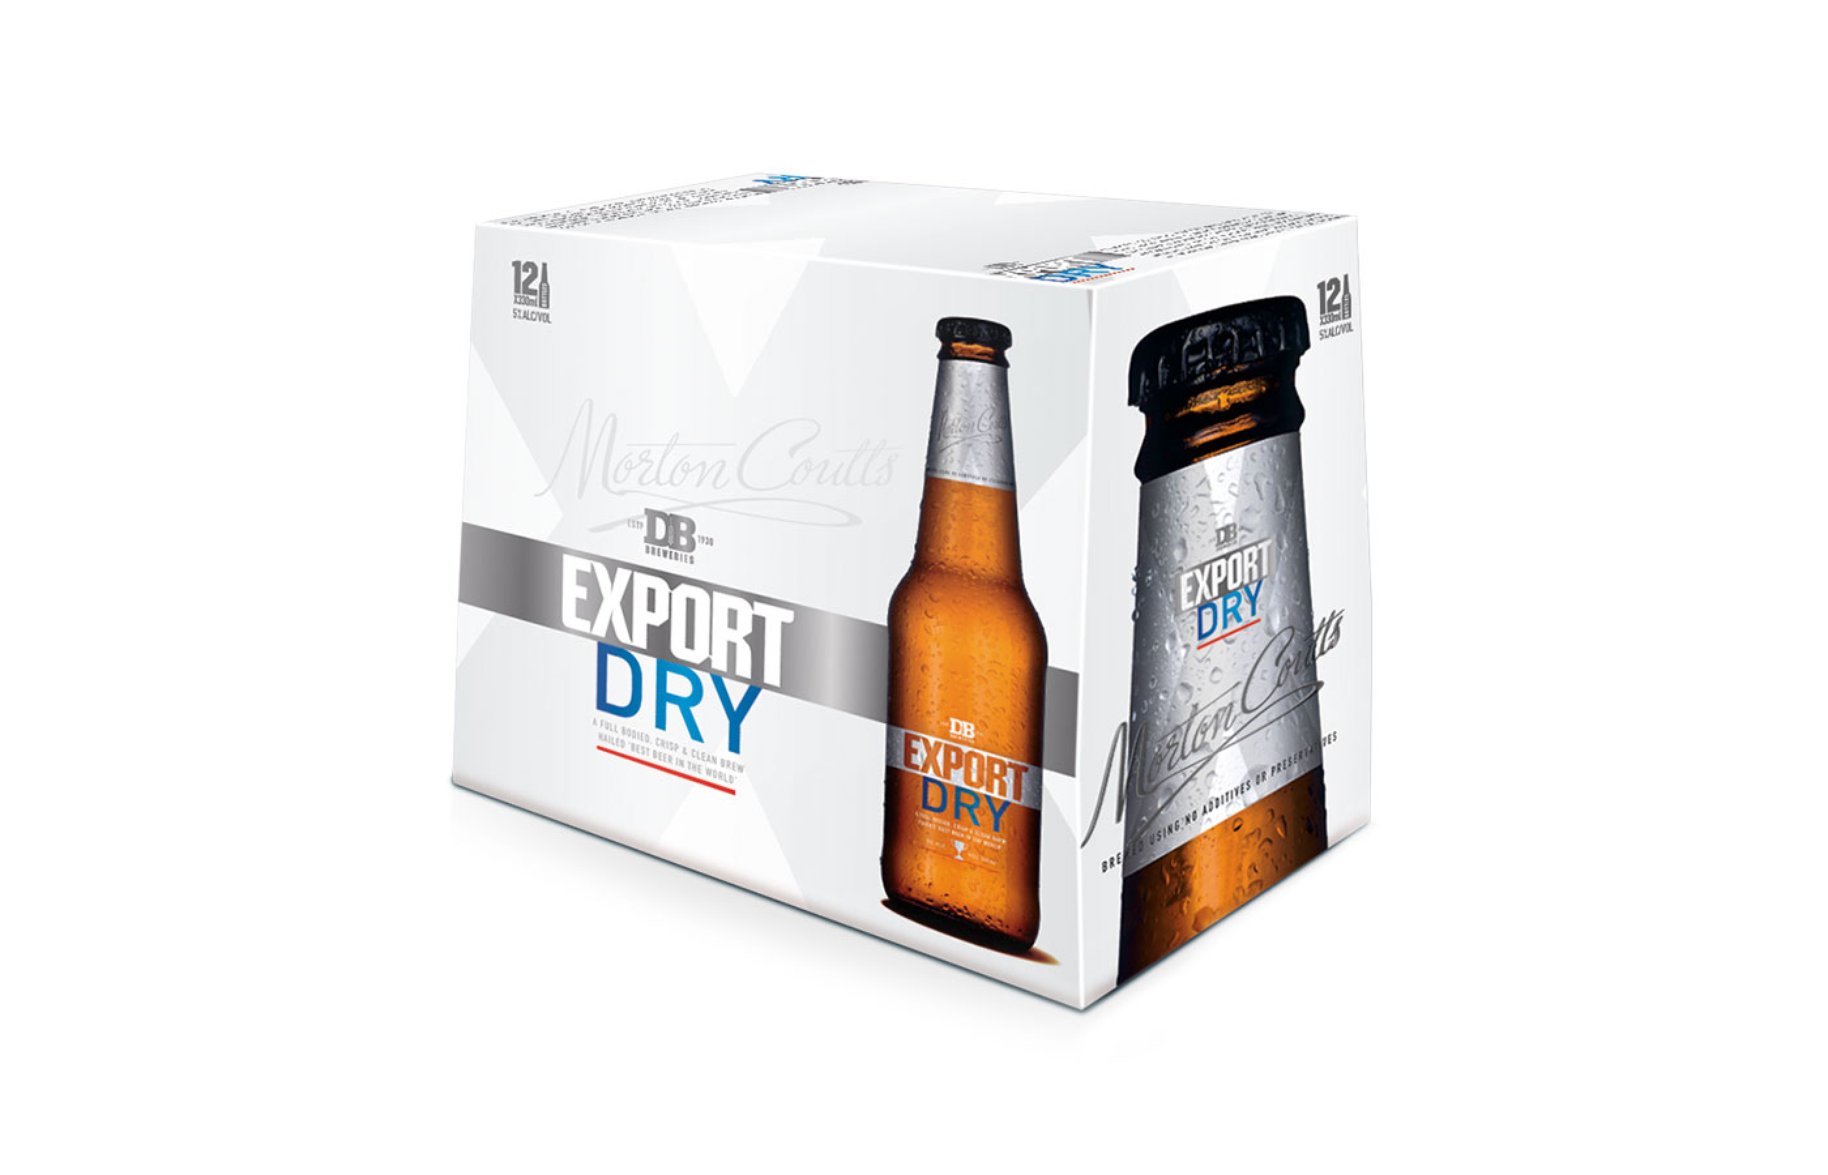 DB Export dry 12 pack Packaging 